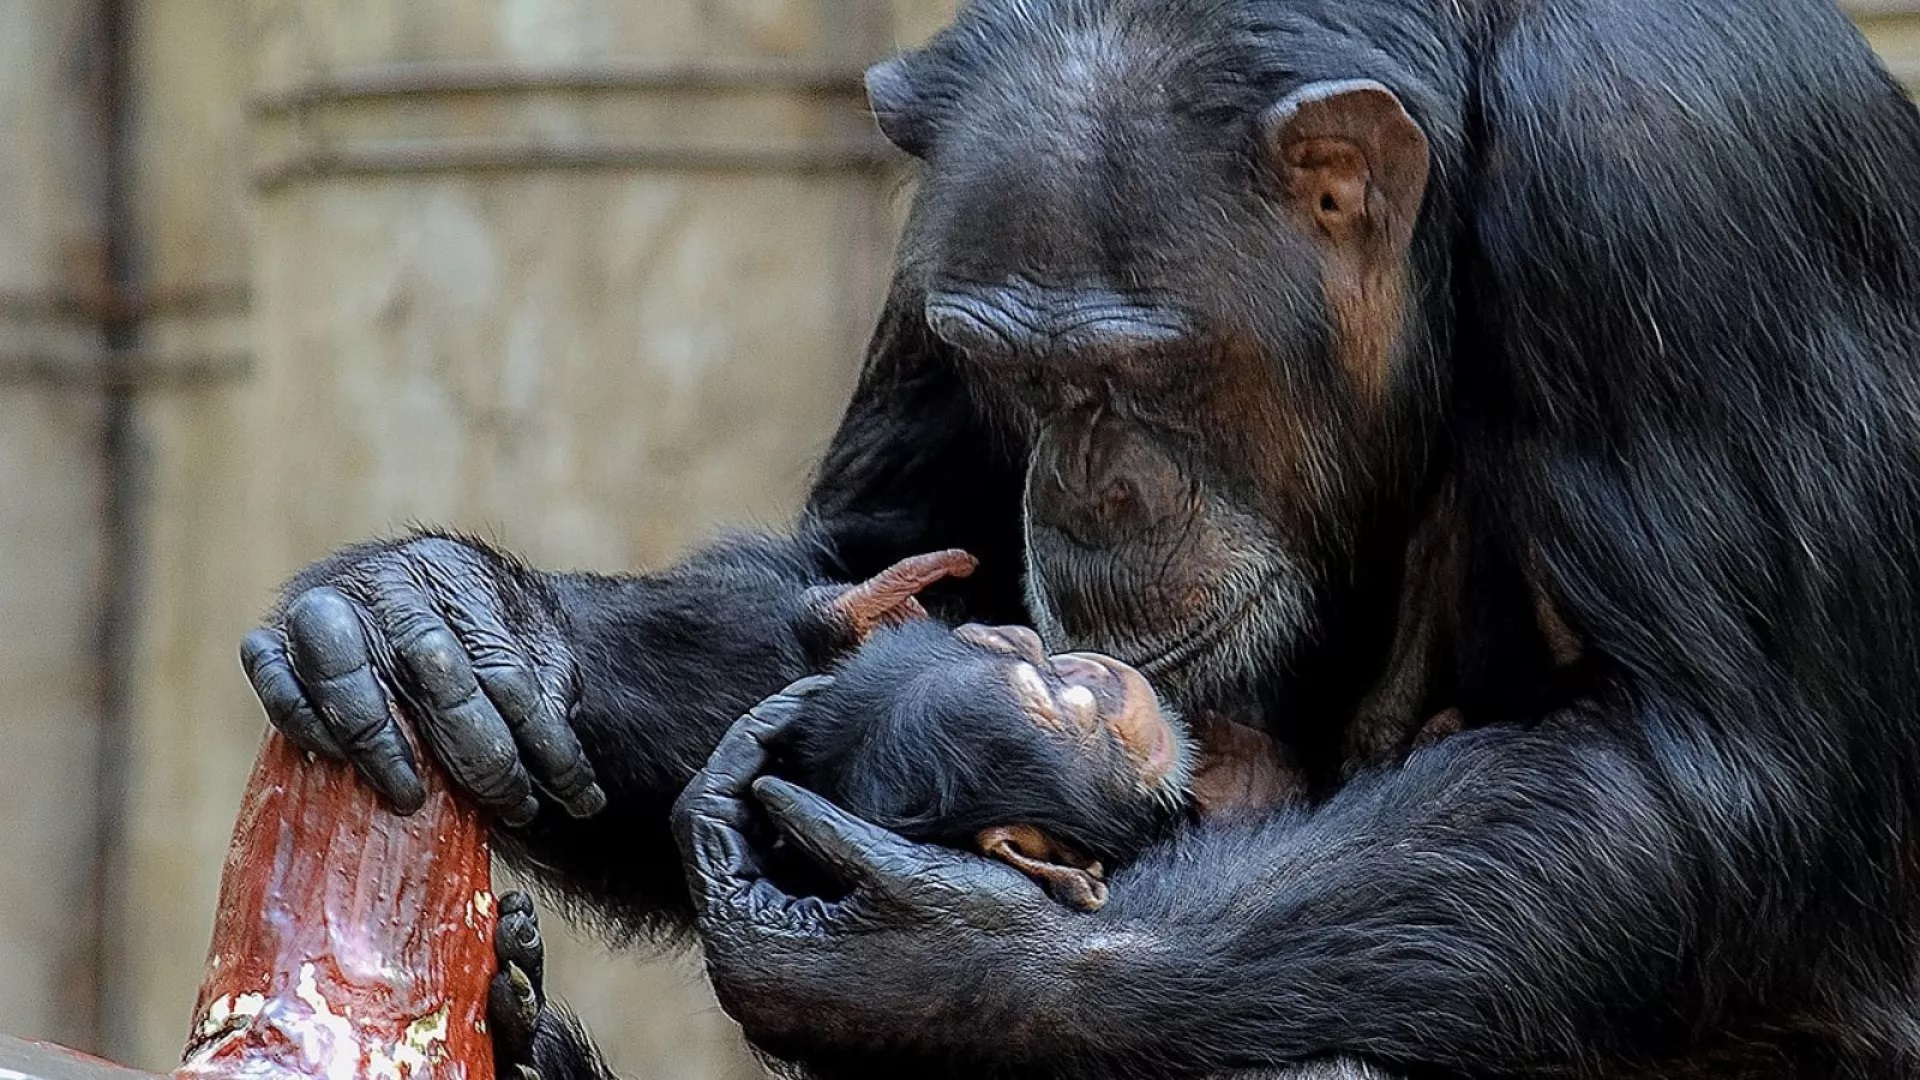 شامپانزه